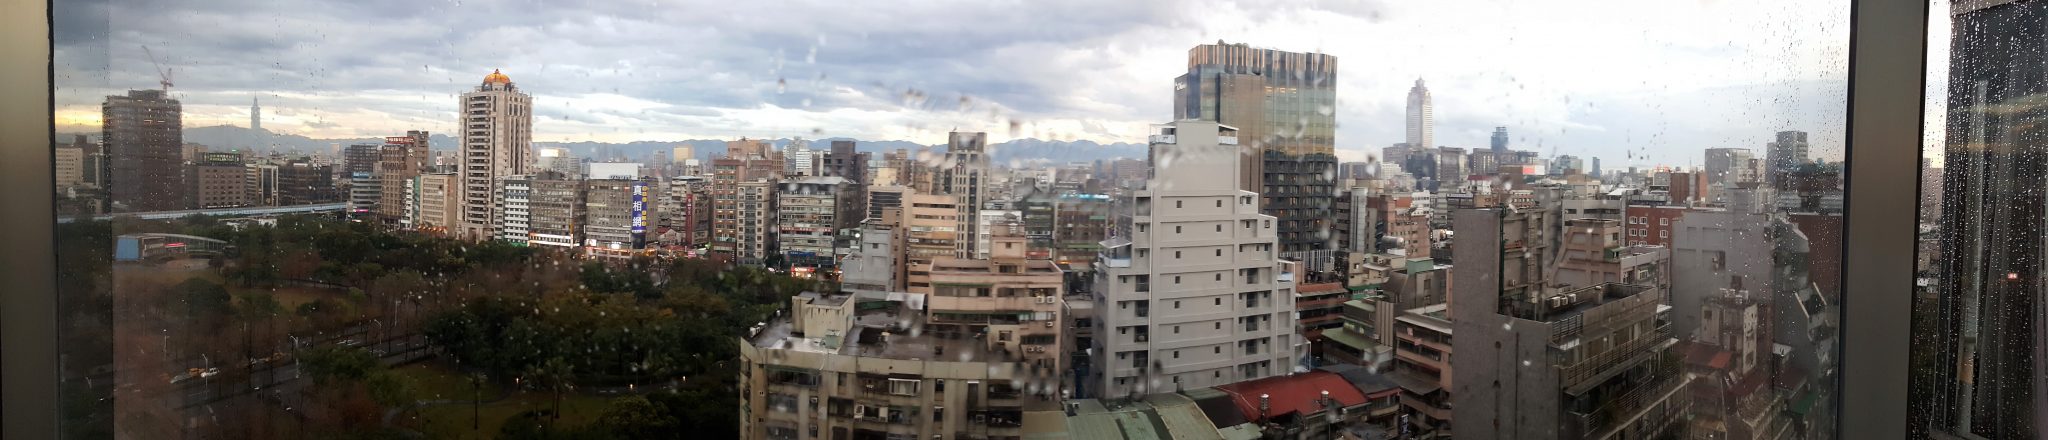 uitzicht taipei 101 taiwan stad stop over treasury travel